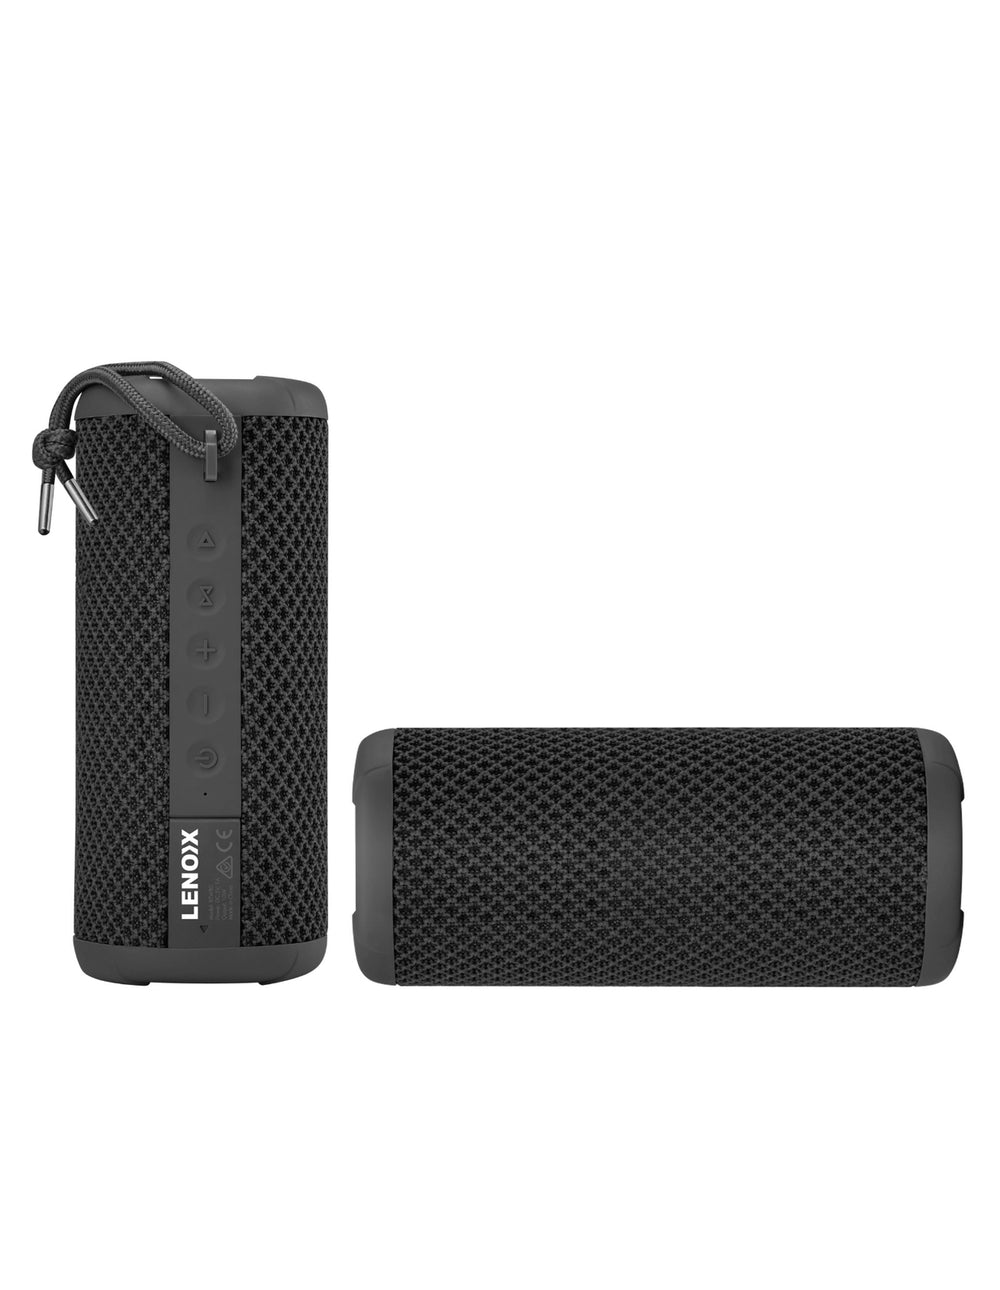 Lenoxx IPX7 Waterproof &amp; Portable Bluetooth Speaker (Black) 10W, 360 Audio